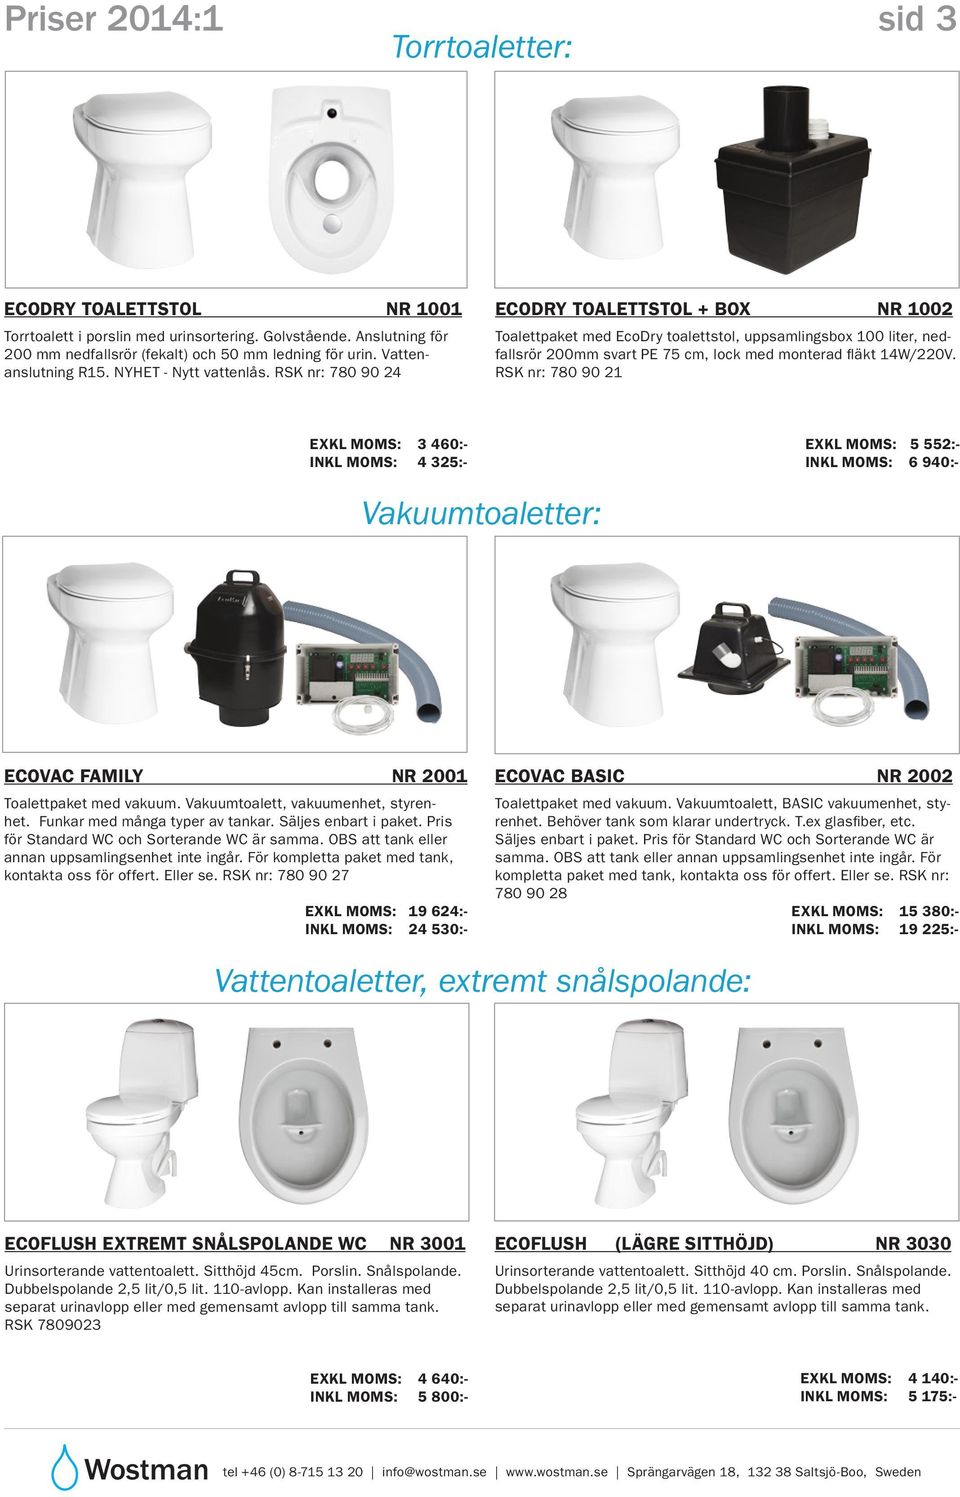 RSK nr: 780 90 24 ECODRY TOALETTSTOL + BOX NR 1002 Toalettpaket med EcoDry toalettstol, uppsamlingsbox 100 liter, nedfallsrör 200mm svart PE 75 cm, lock med monterad fläkt 14W/220V.